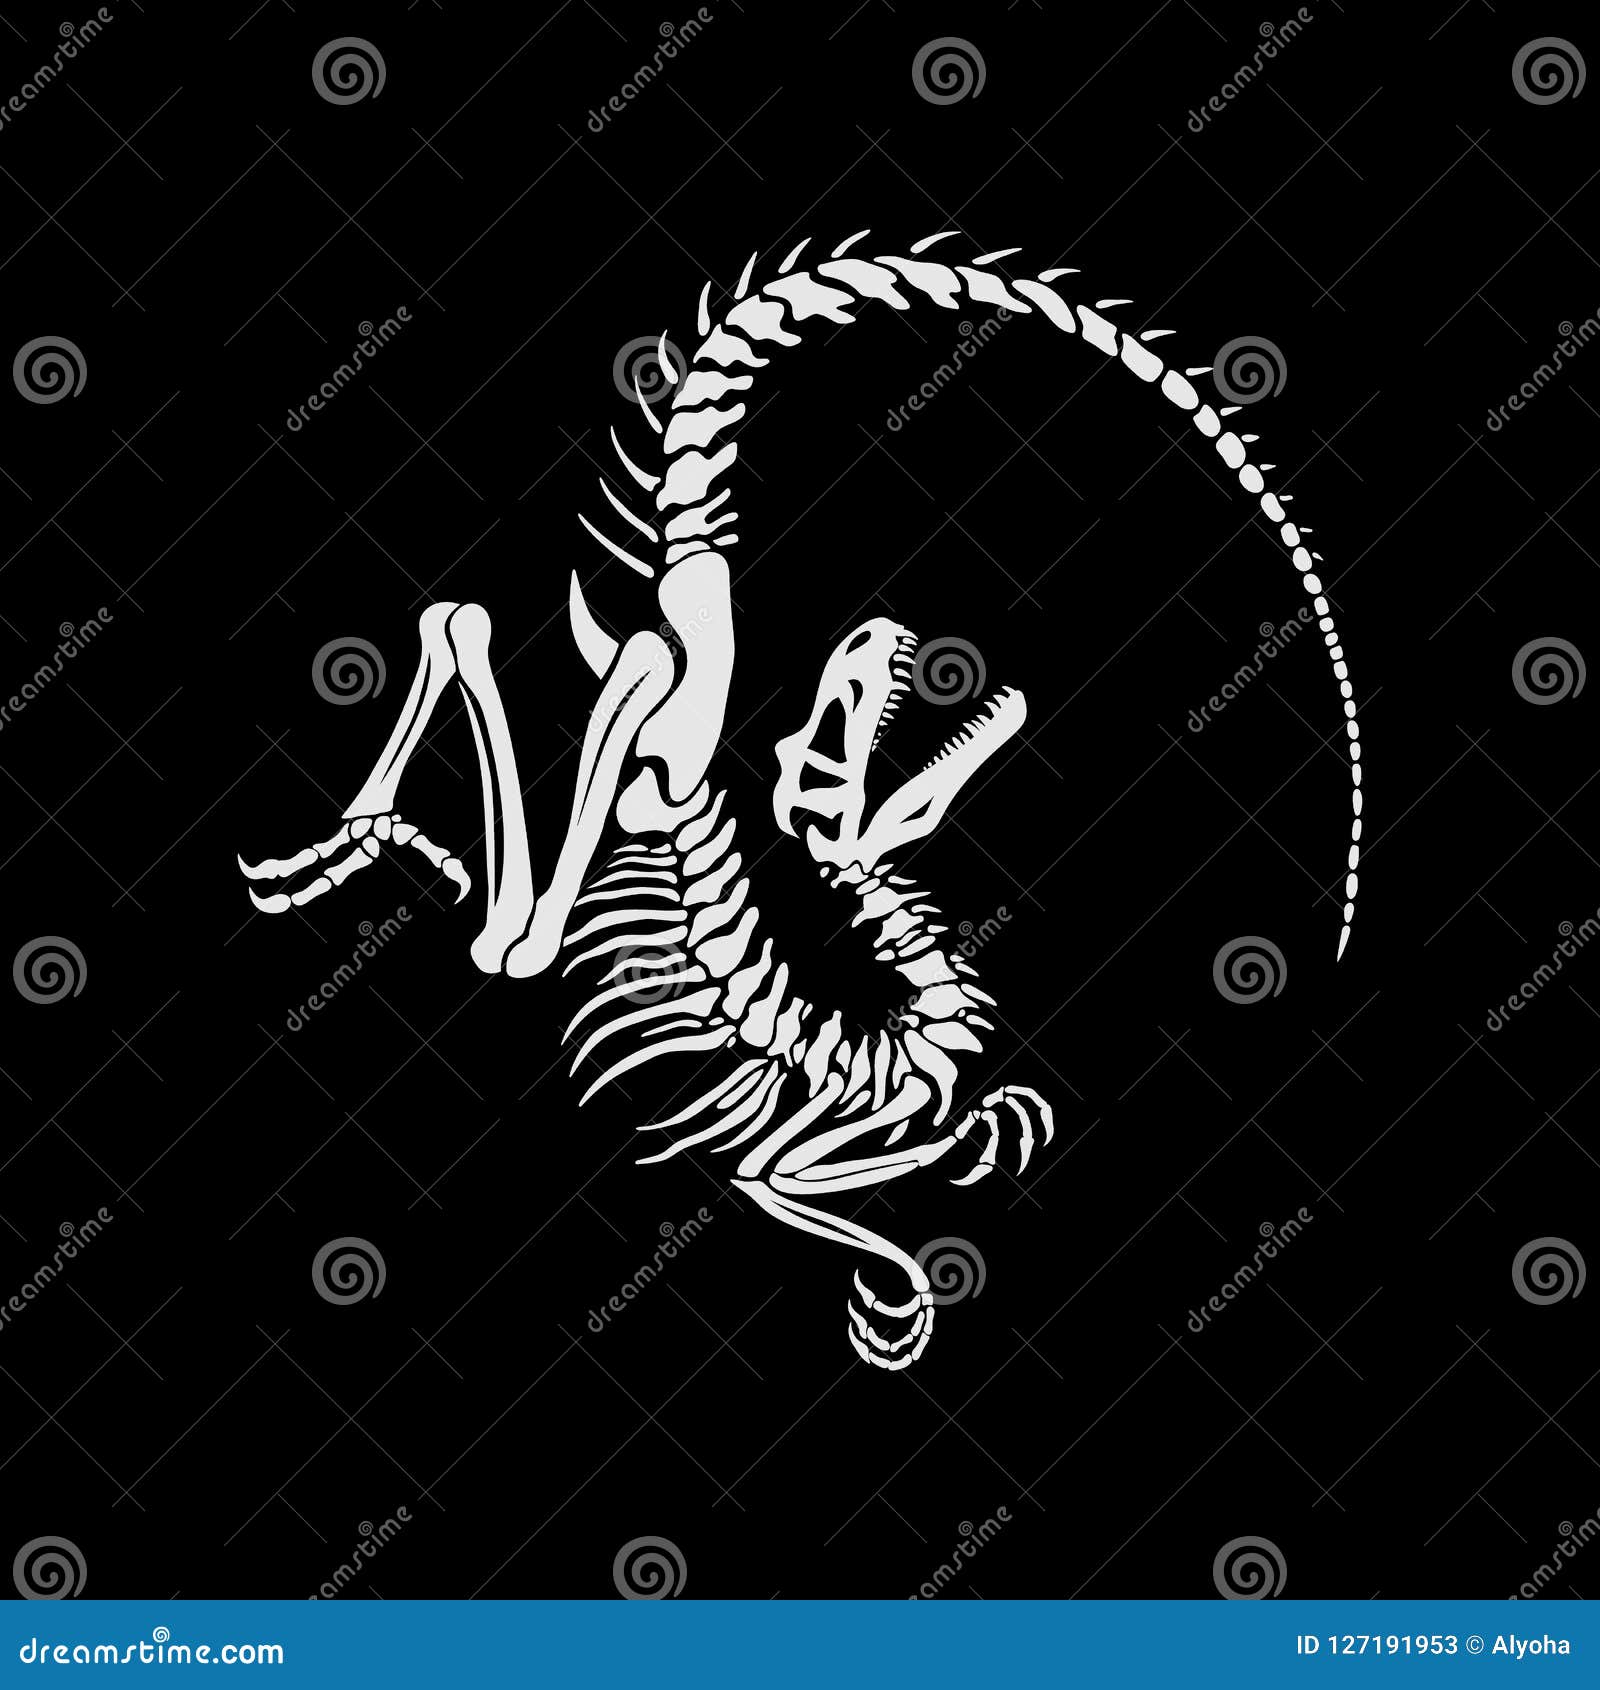 velociraptor skeleton on a black background